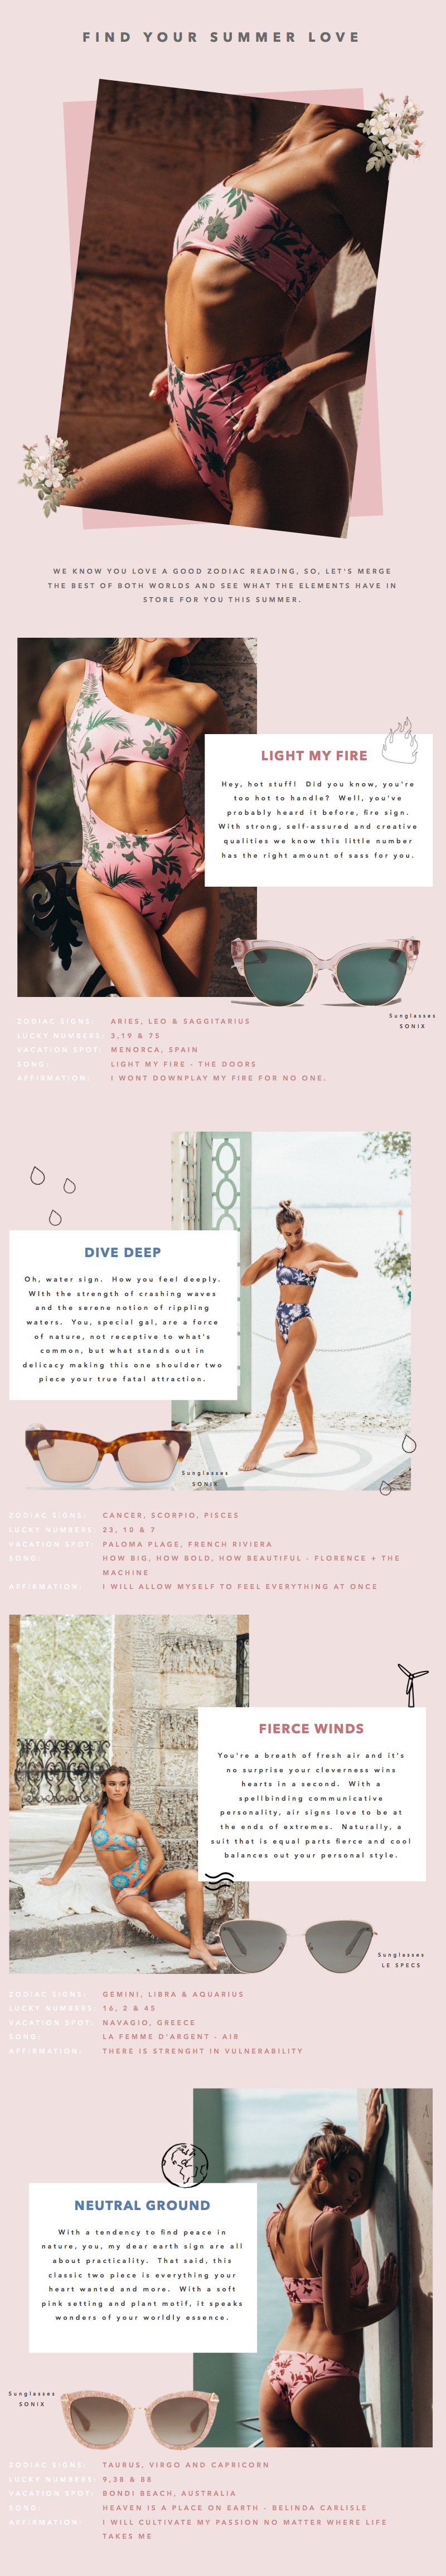 Find Your Summer Love | Sunglasses | Swimwear 